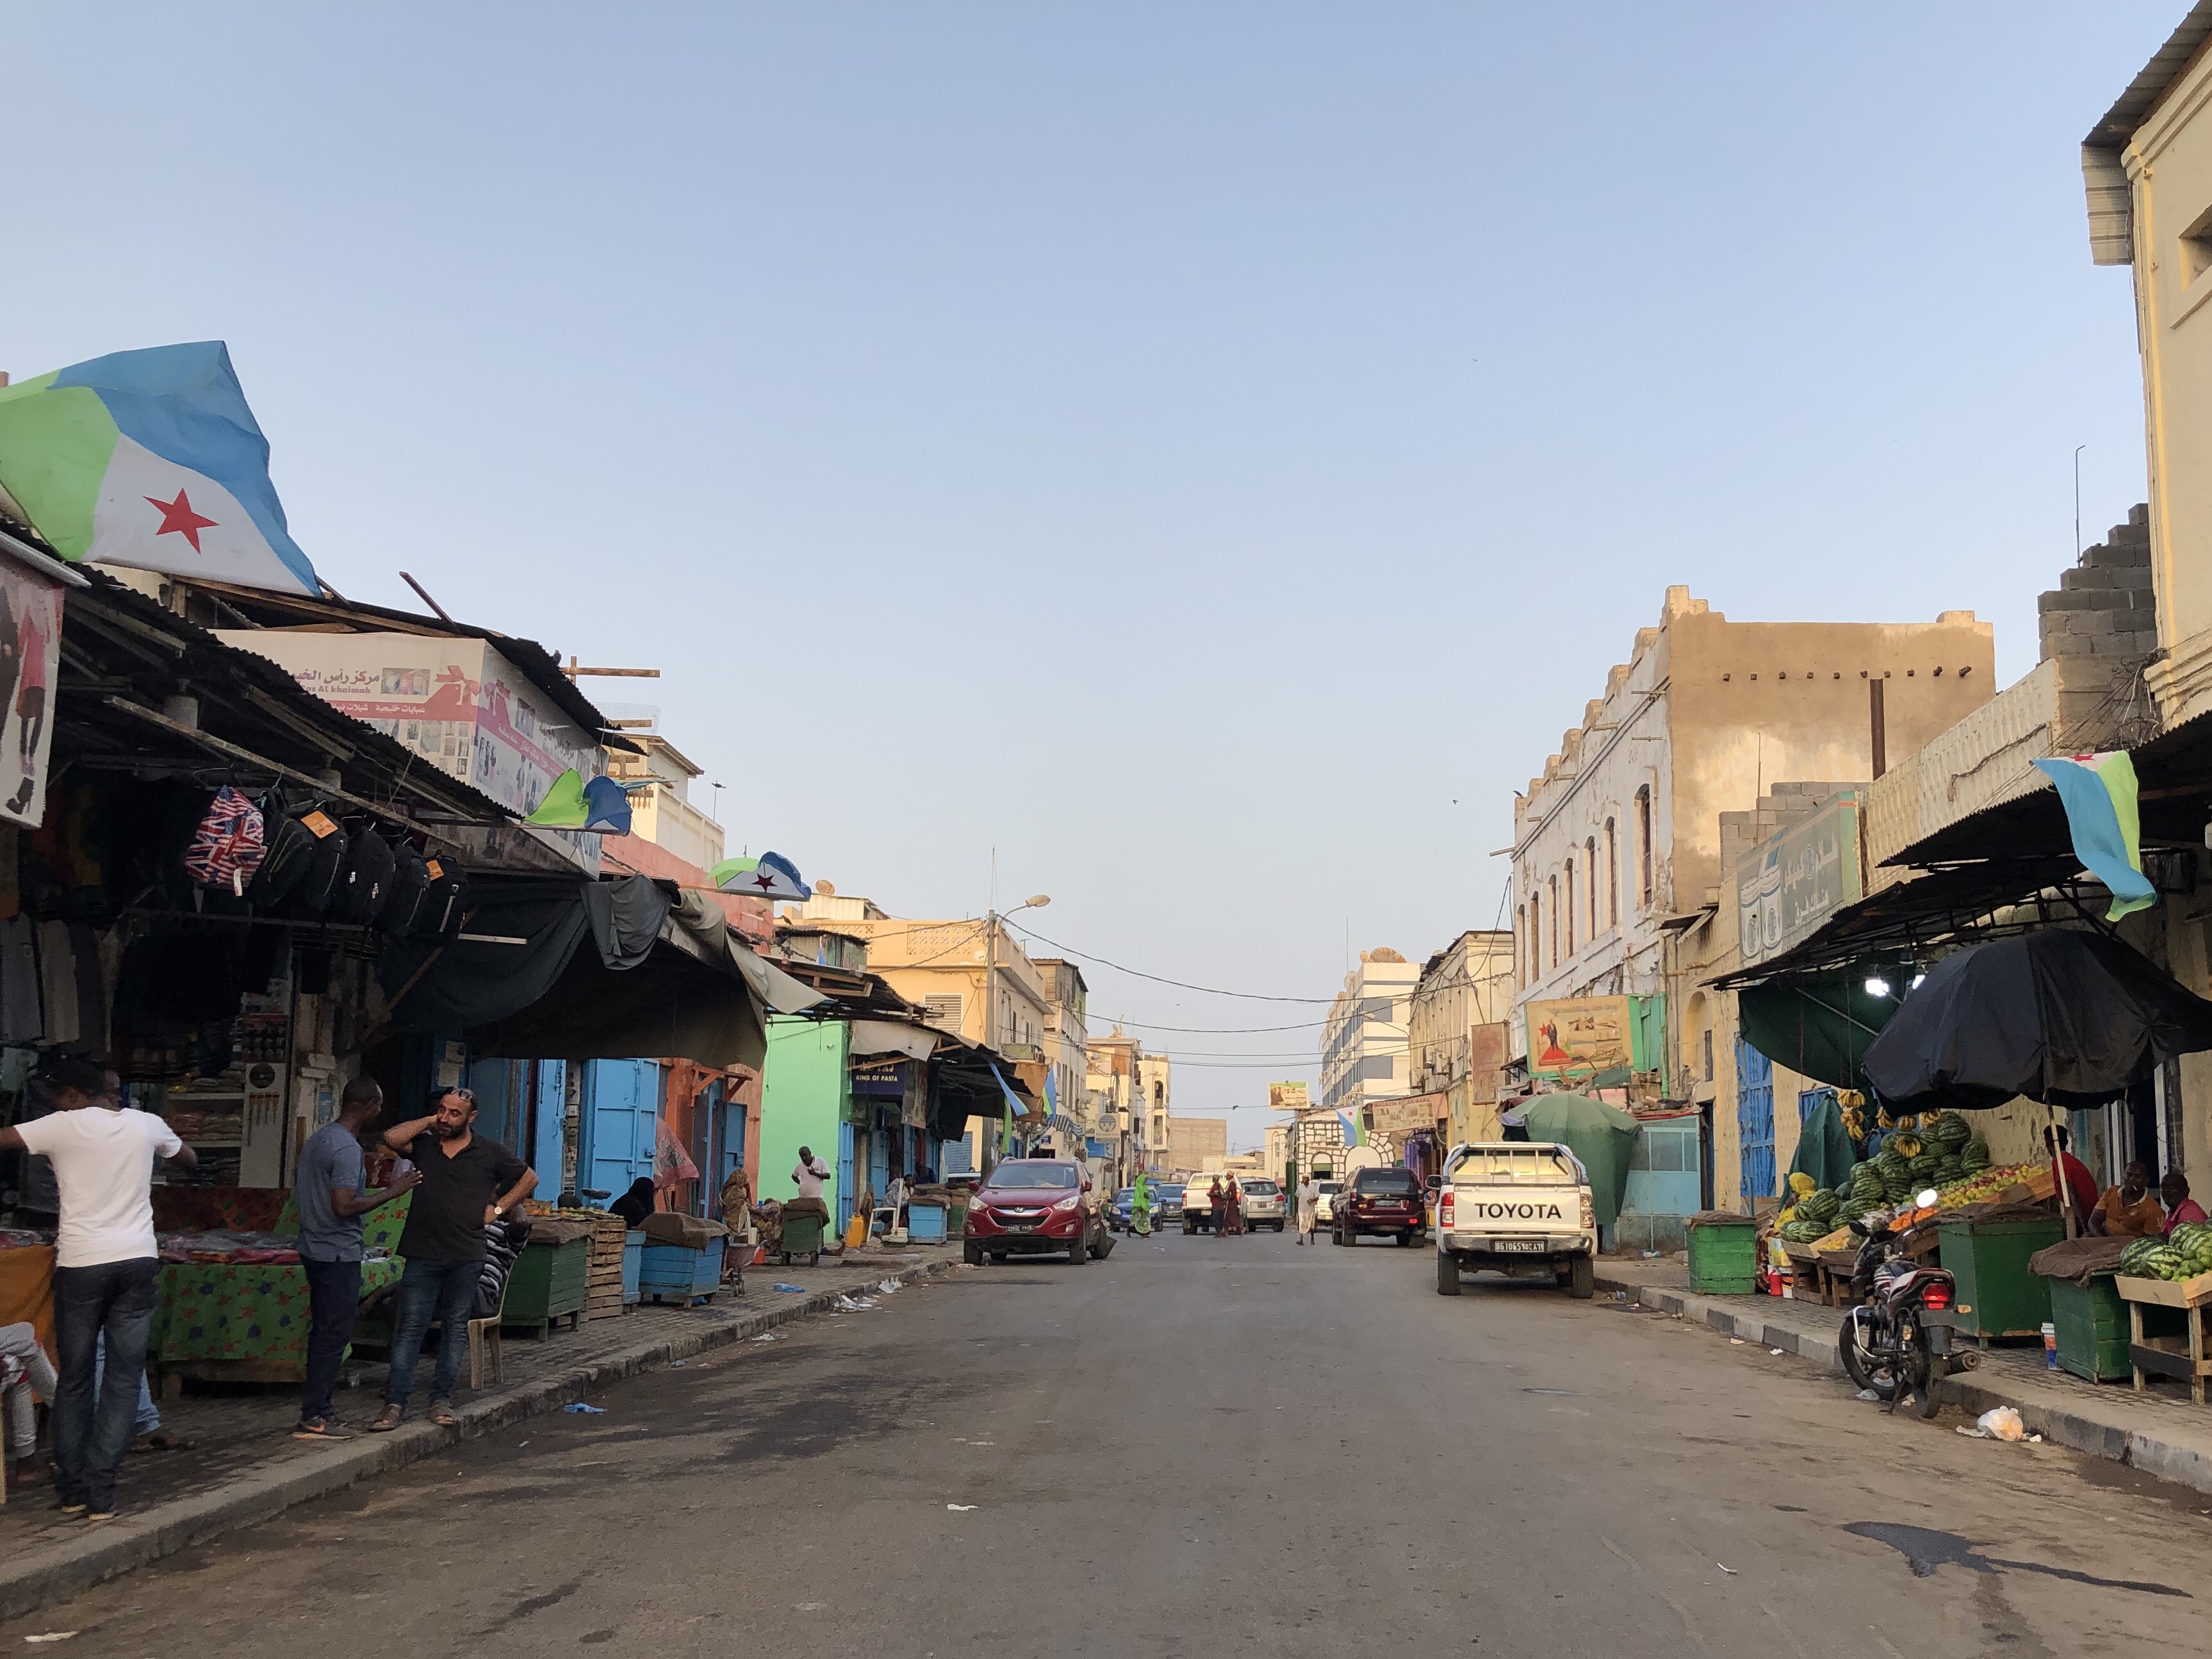 Day78 ジブチを旅する ジブチの首都 ジブチ 世界一暑い国のオシャレな街づくりと無料で味わえる贅沢な夜景 コジマ先生アフリカへ行く